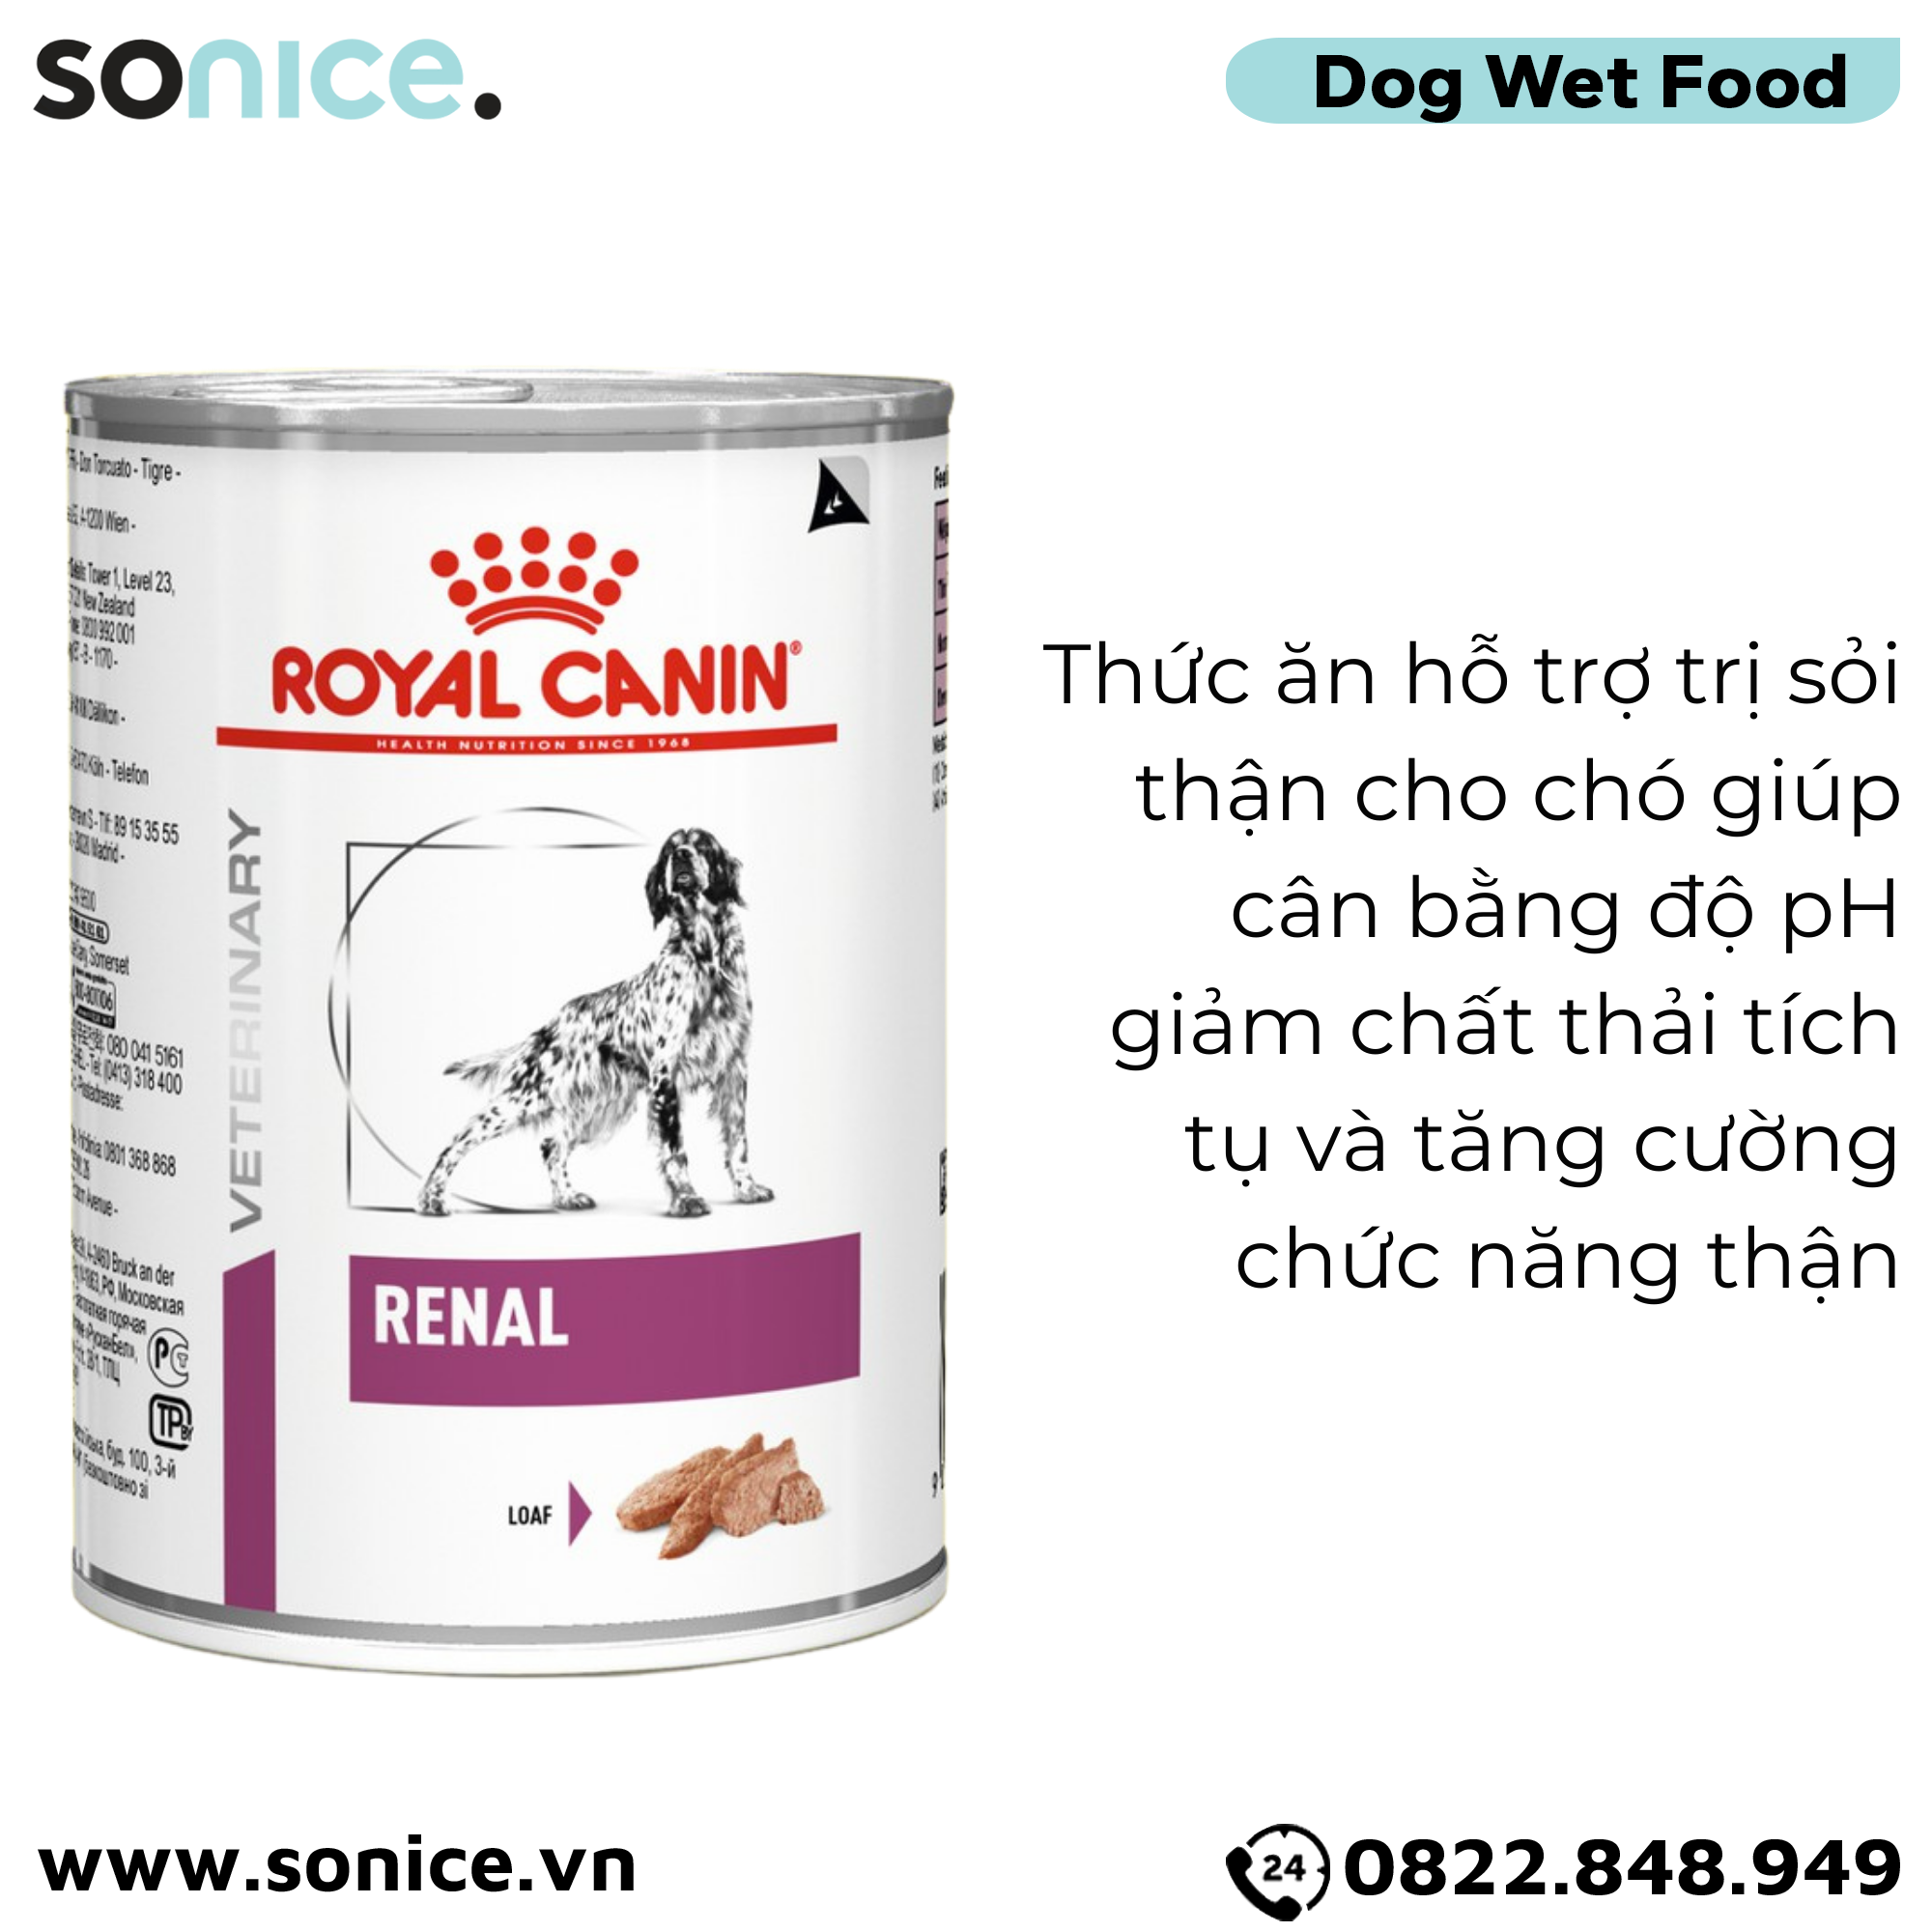  Pate chó Royal Canin Renal Canine Loaf 410g - Hỗ trợ trị sỏi thận SONICE. 